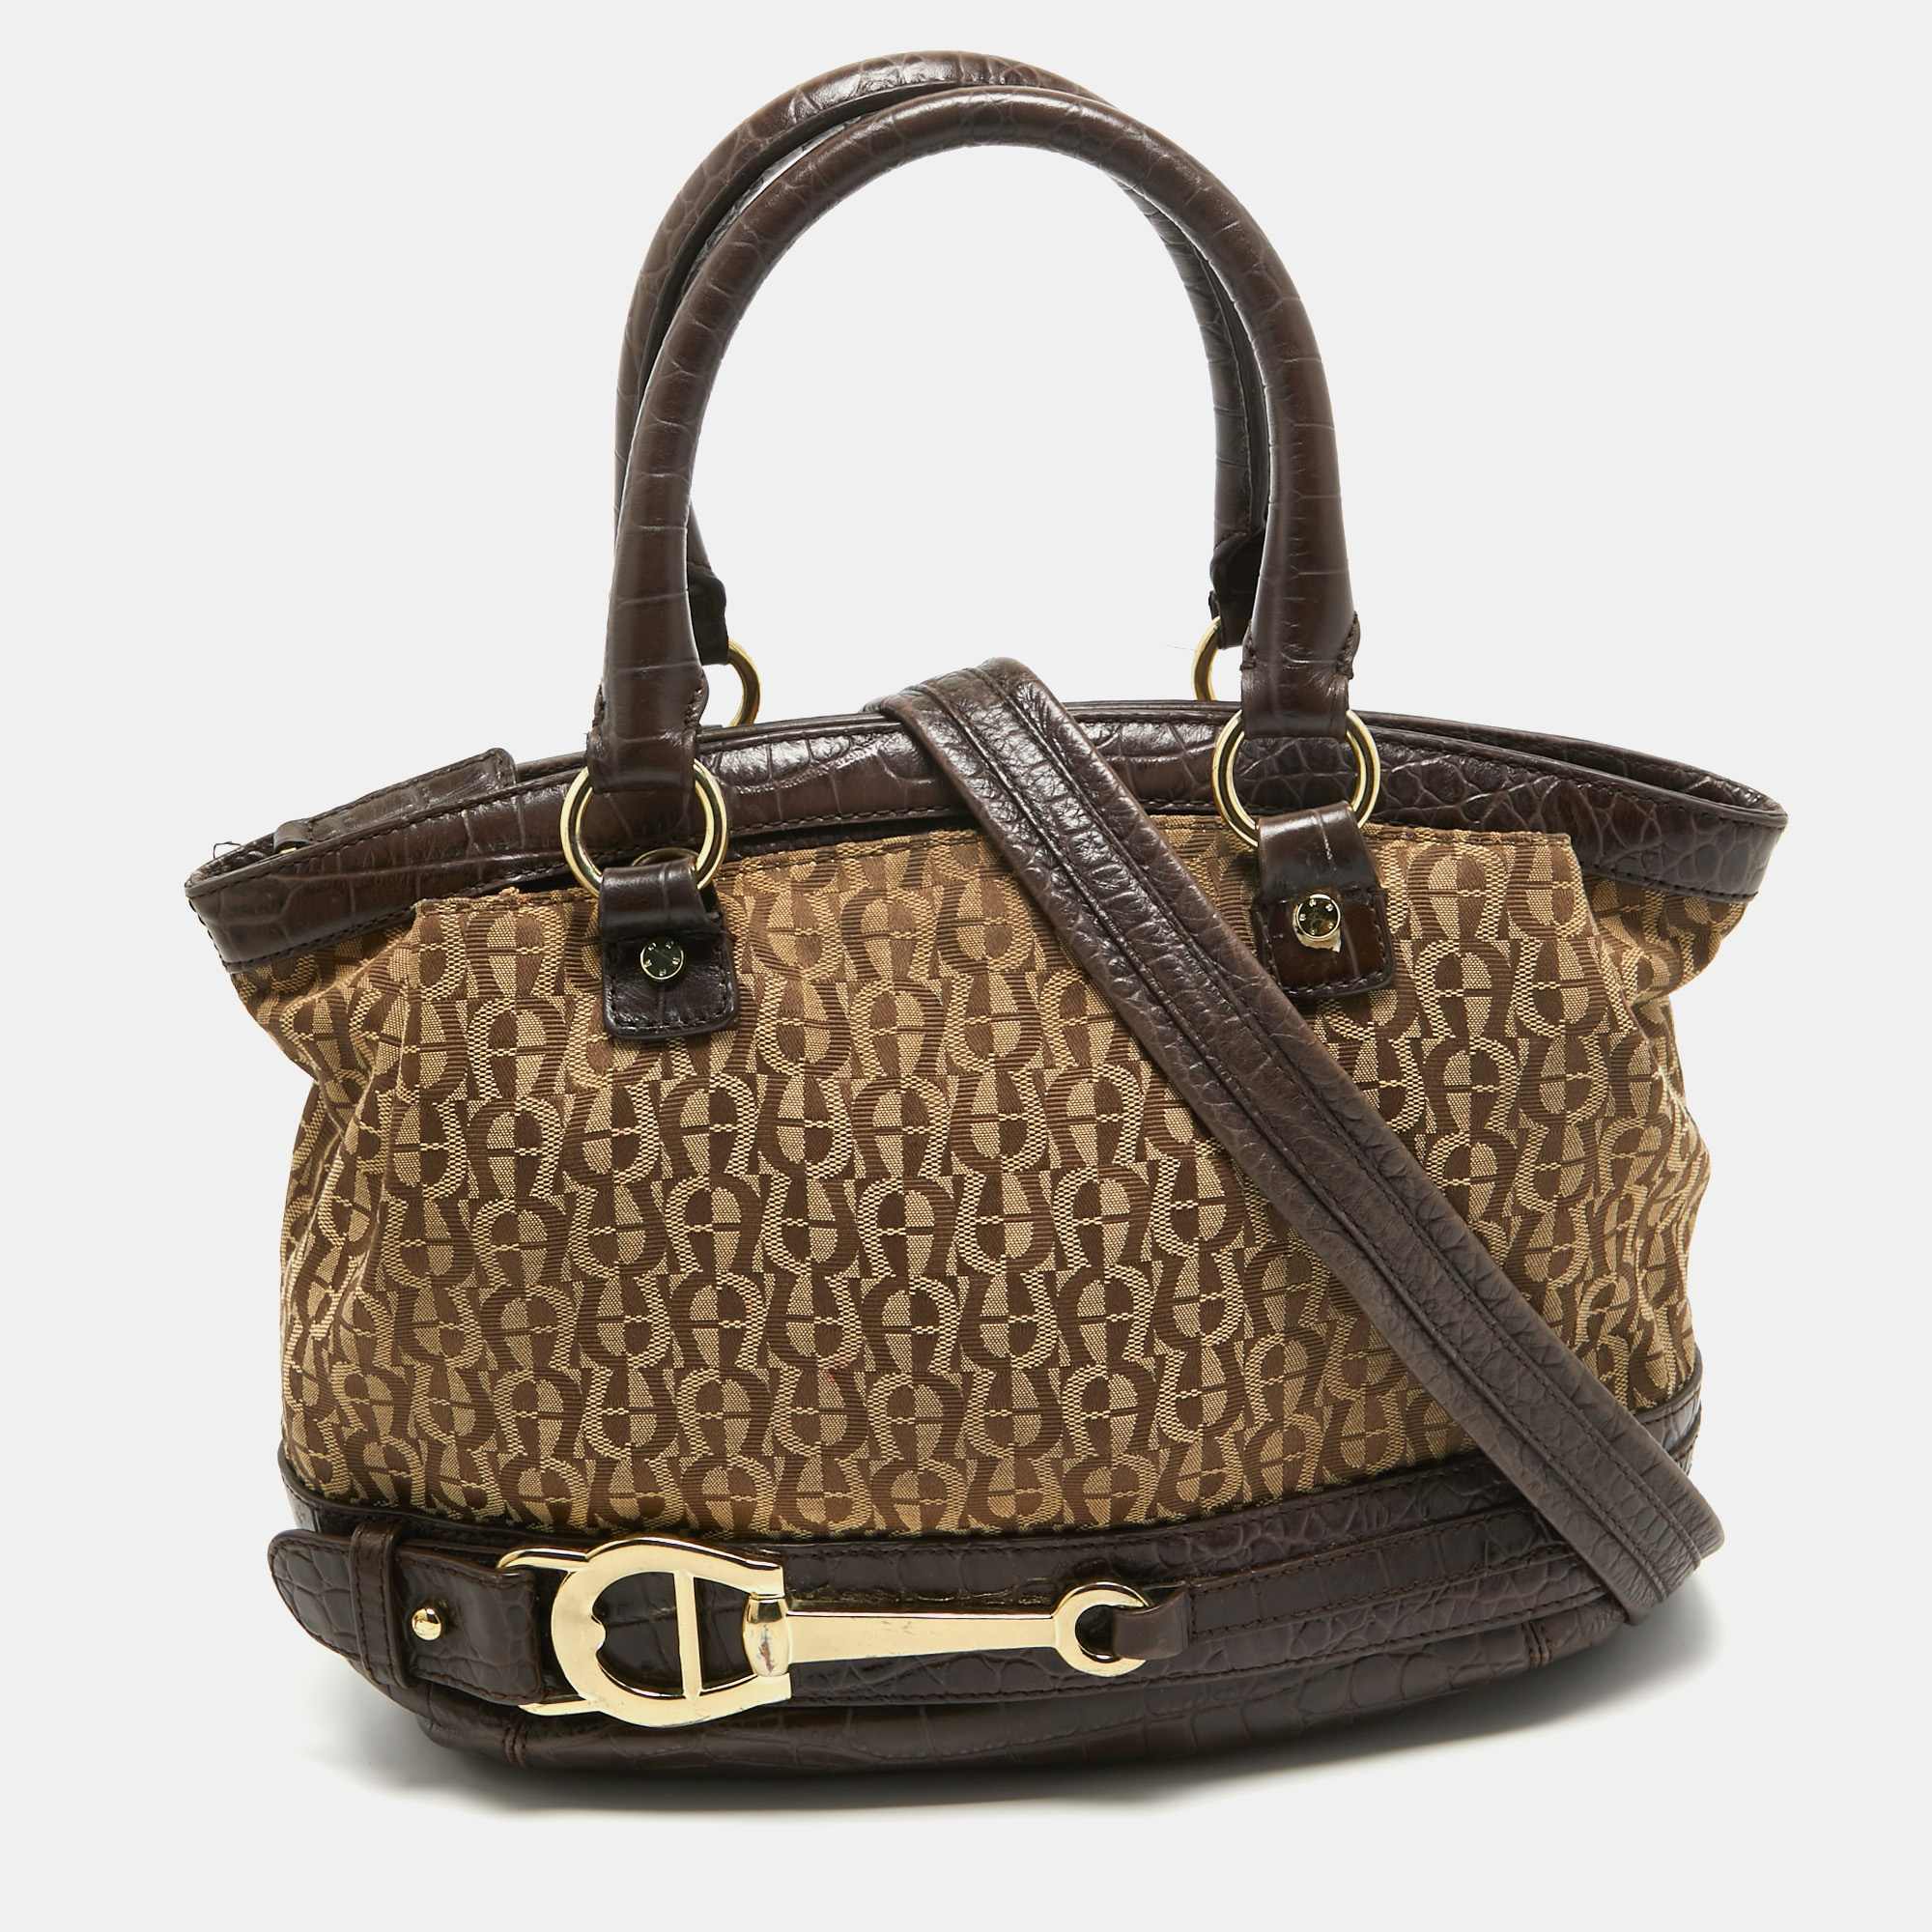 Aigner dark brown/beige signature canvas and croc embossed leather buckle logo satchel